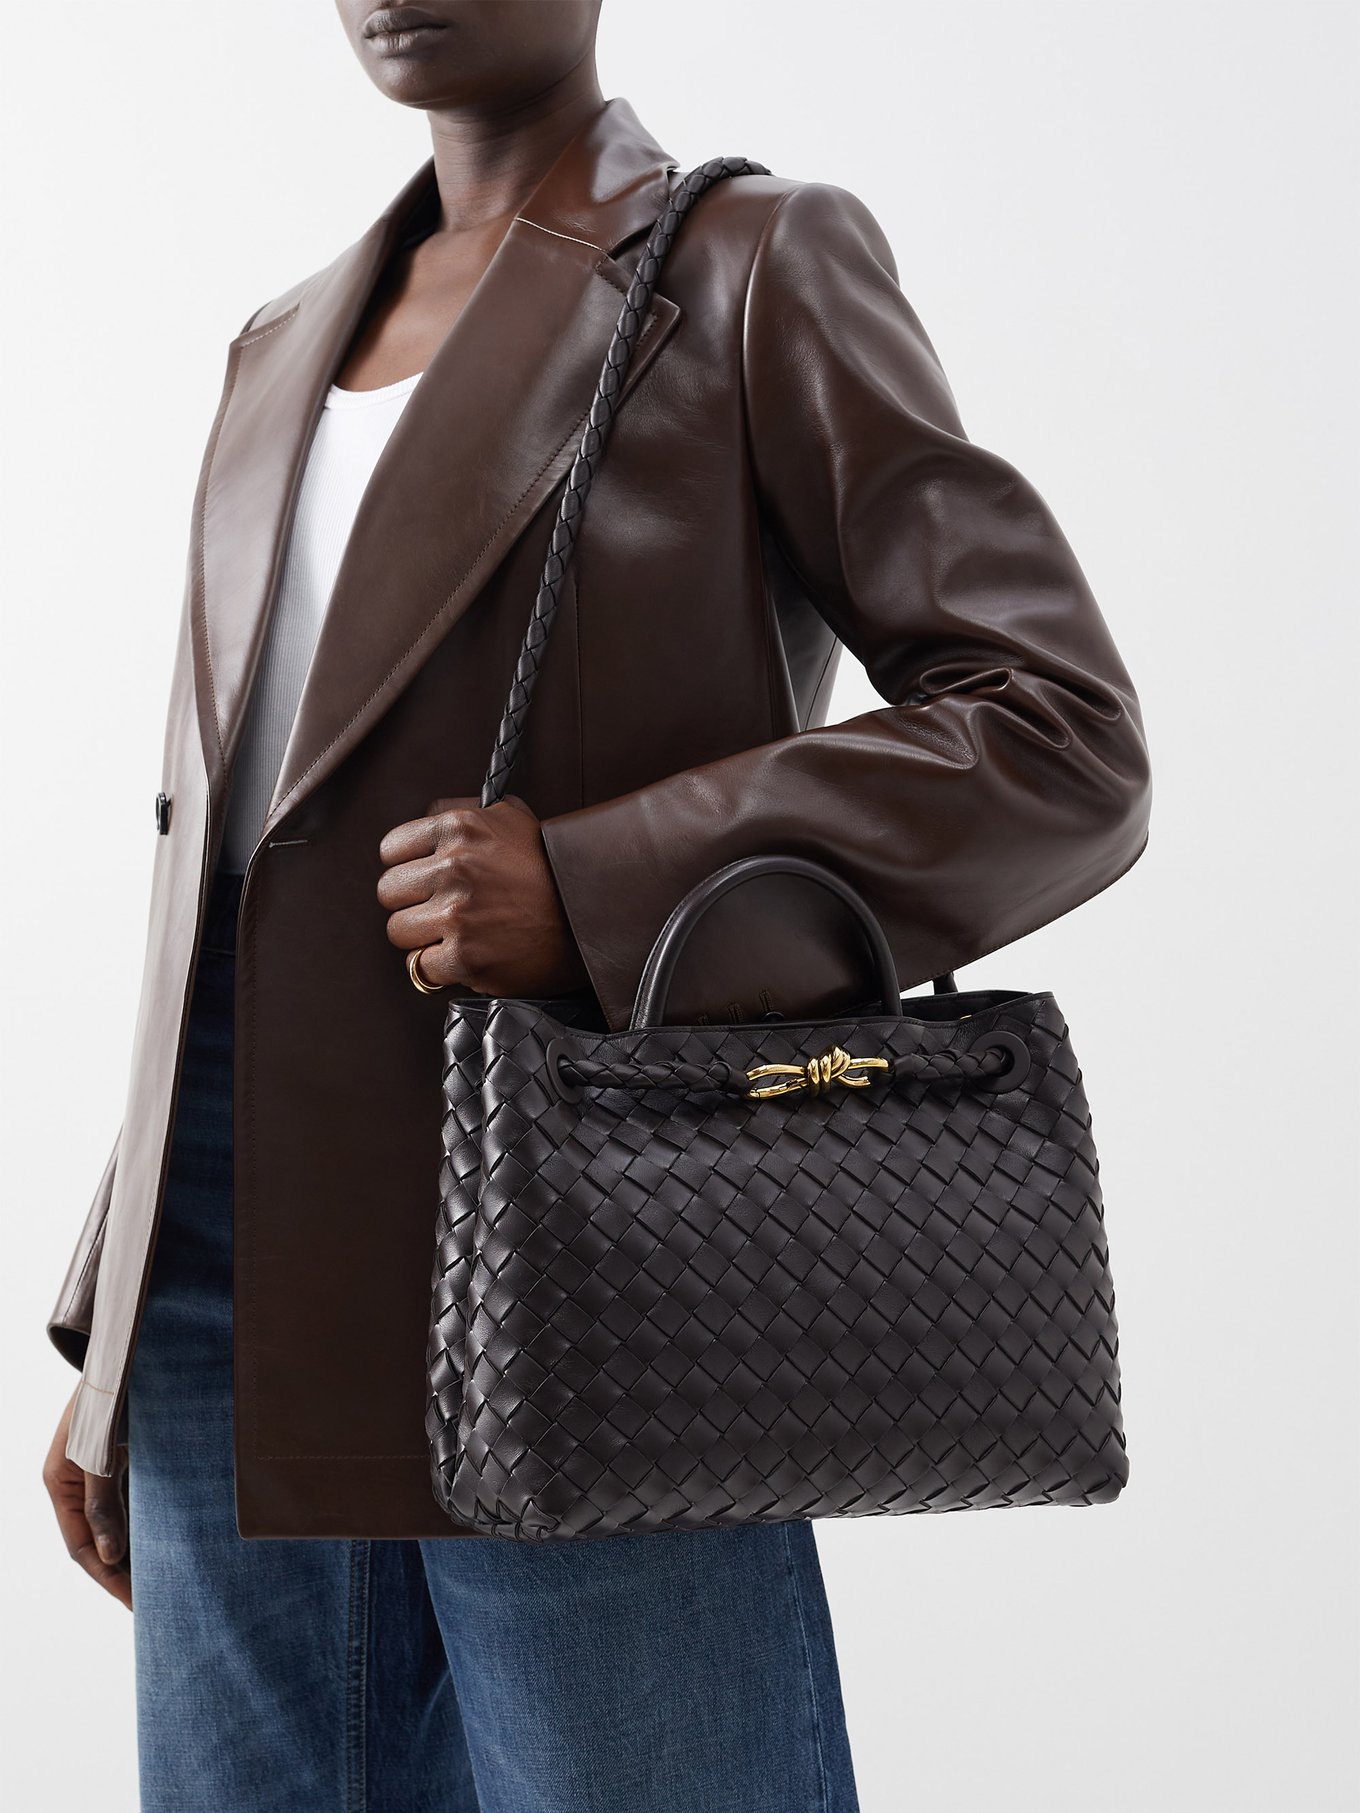 New Large Bottega Veneta Brown Leather Shoulder Bag Made In Italy